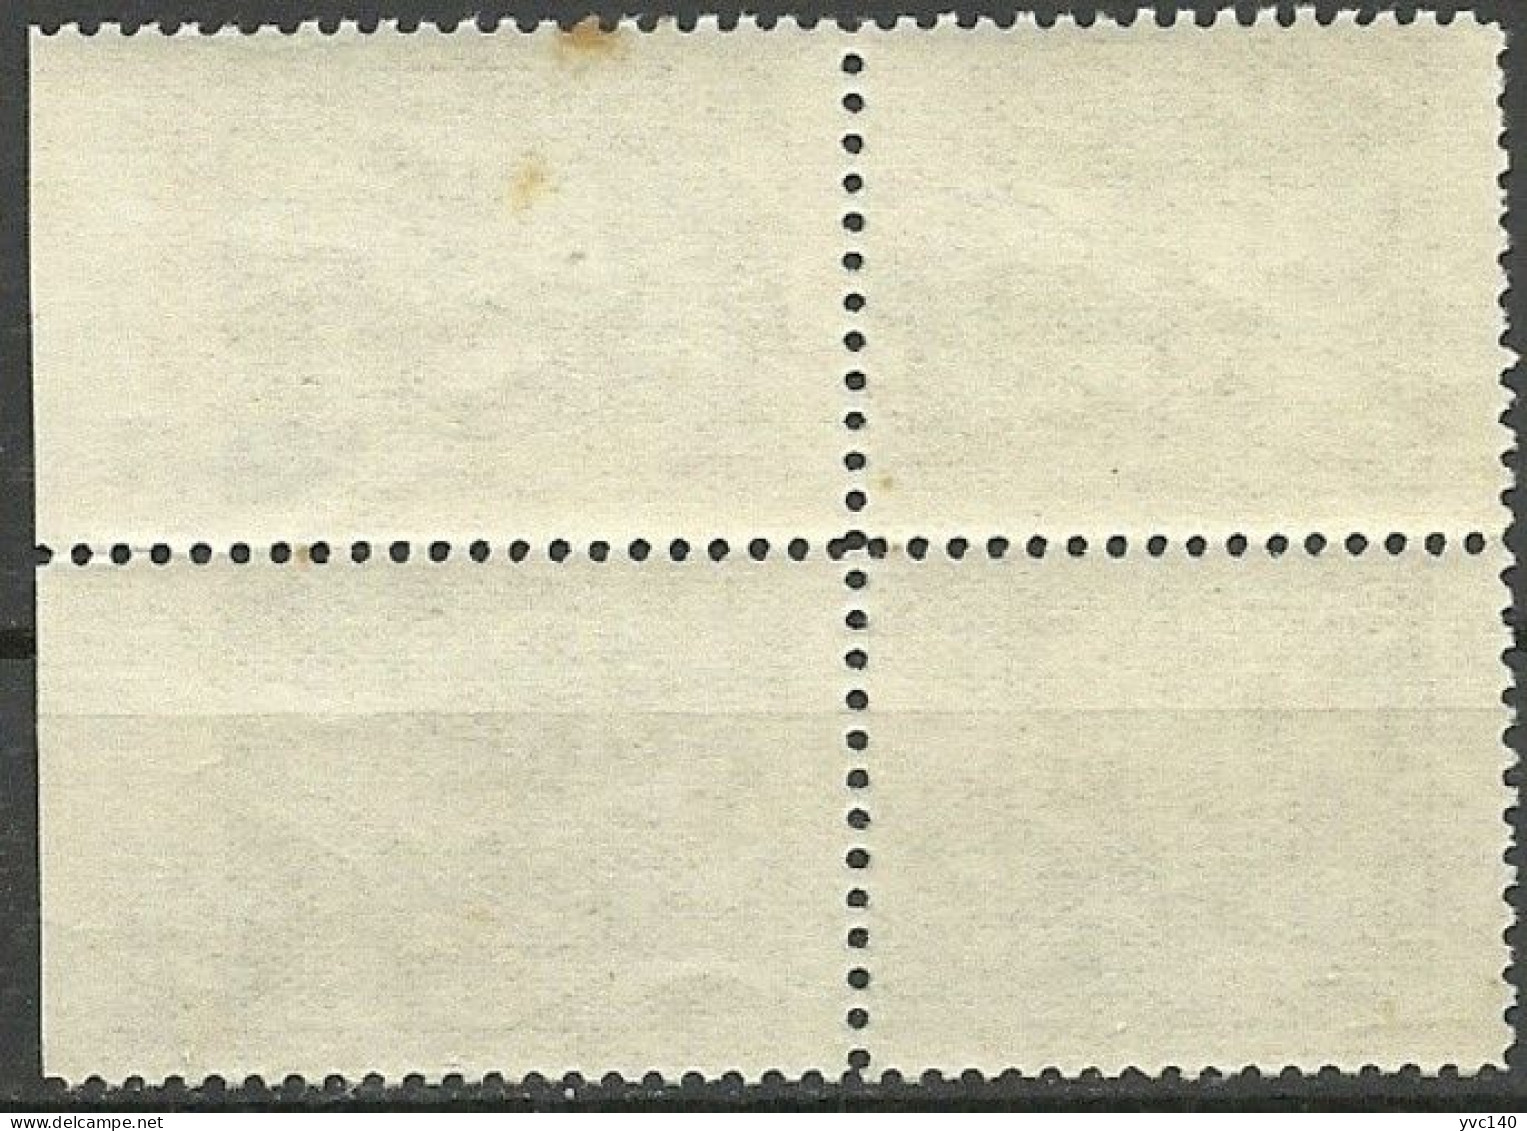 Turkey; 1959 Pictorial Postage Stamp 1 K. ERROR "Imperf. Edge" - Ongebruikt